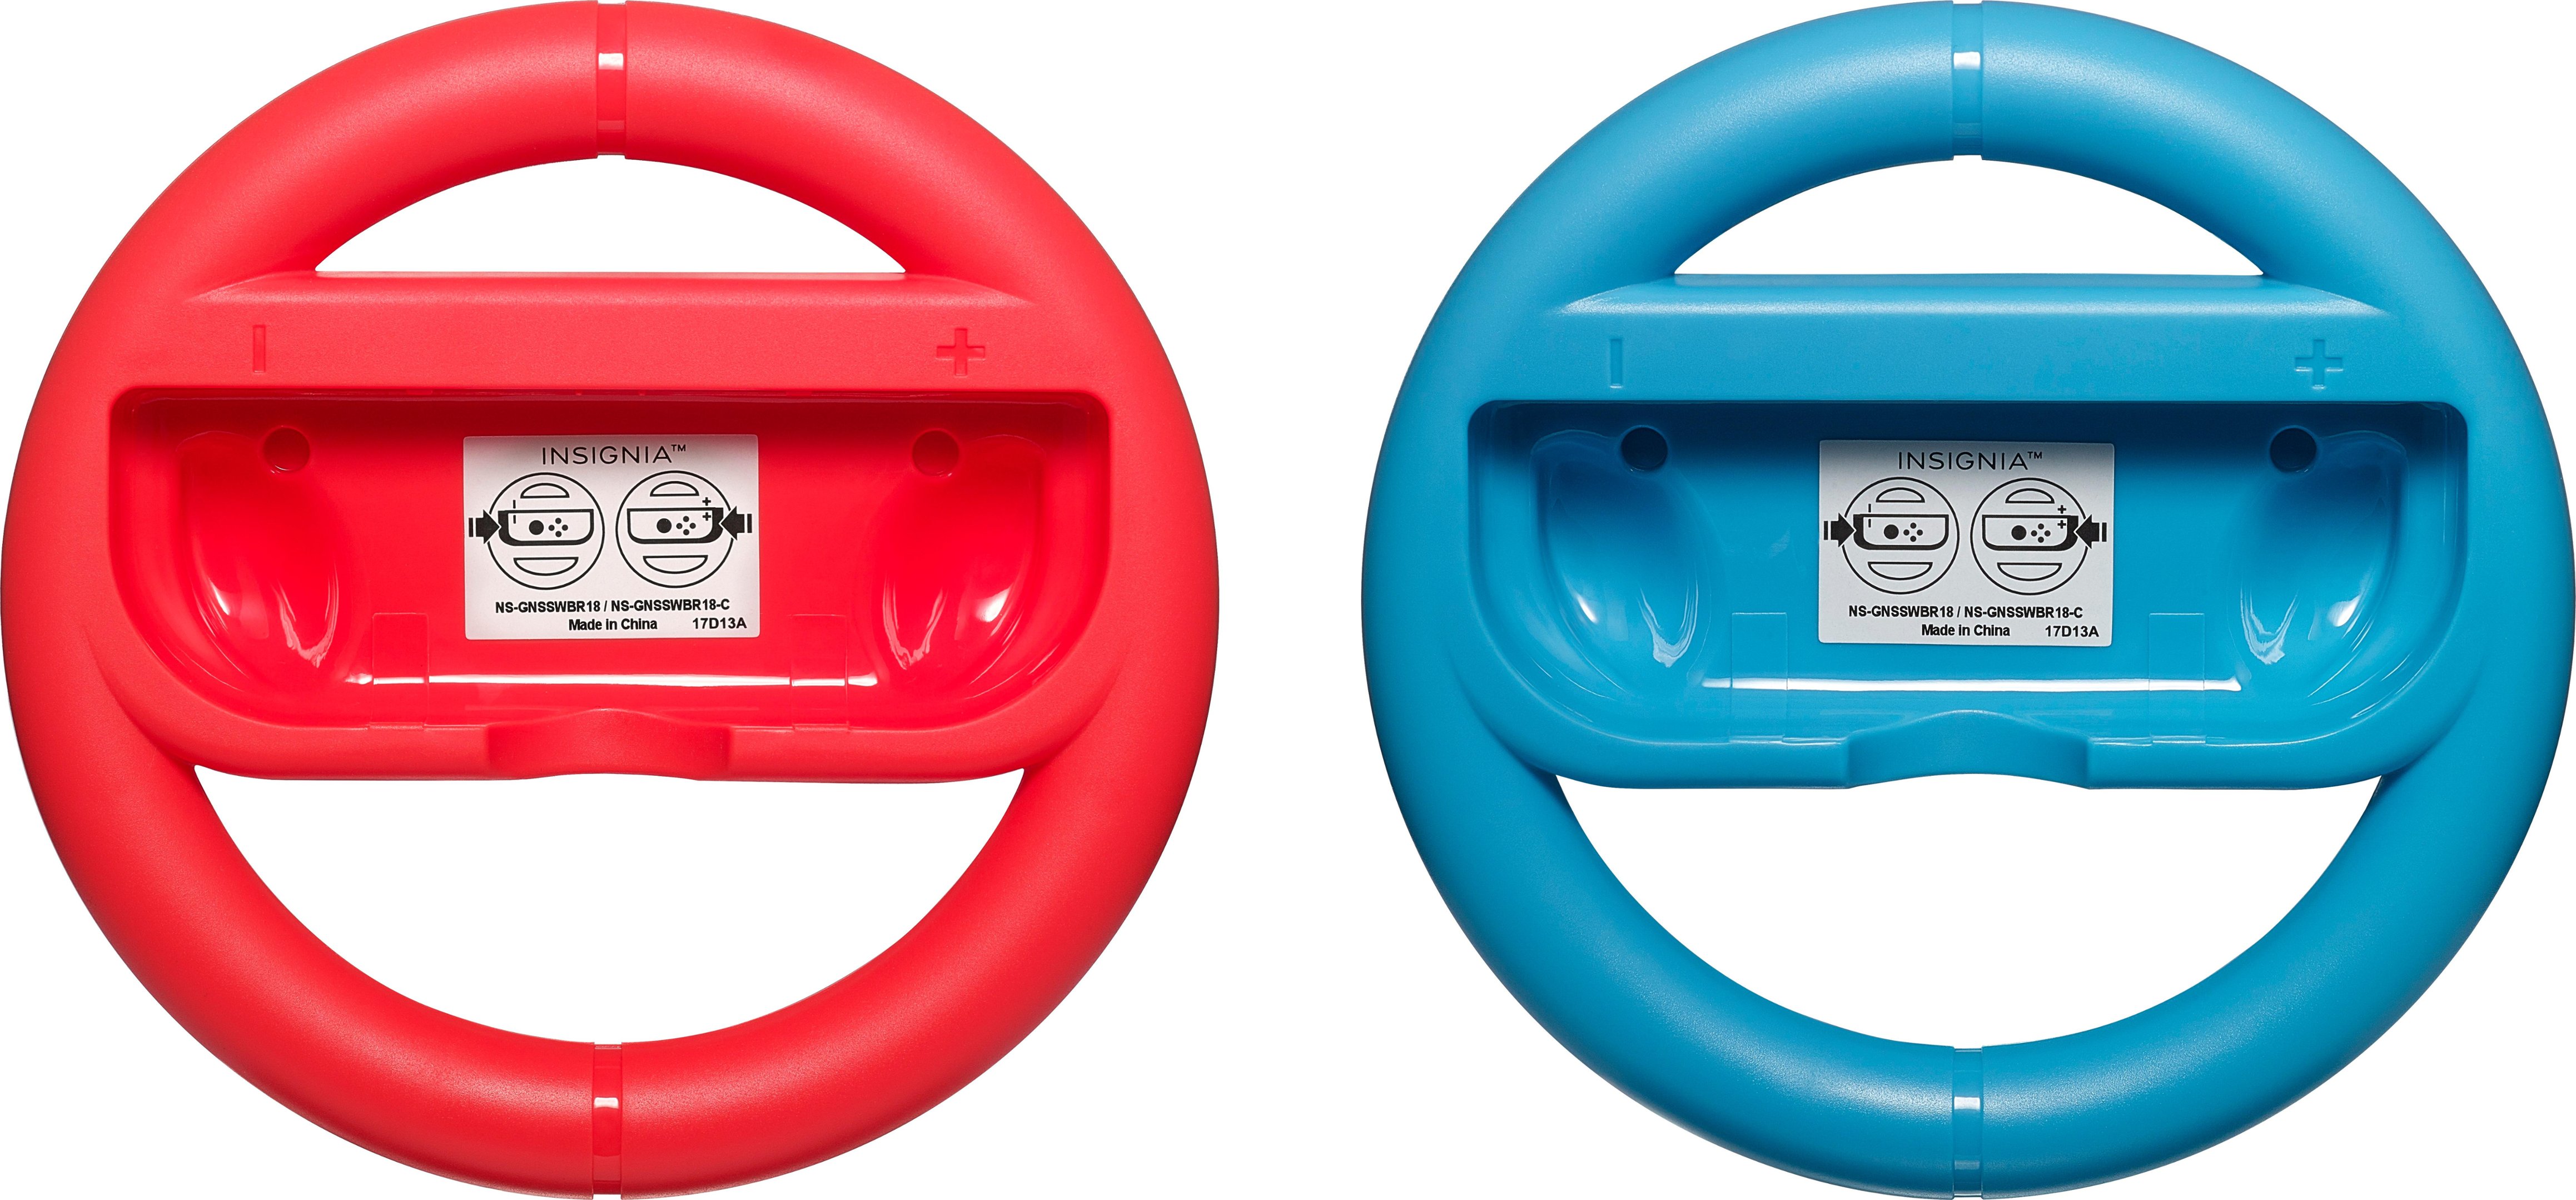 Best (2-Pack) Insignia™ Blue Wheel Nintendo red/Neon Buy: NS-GNSSWBR18 for Neon Joy-Con Switch